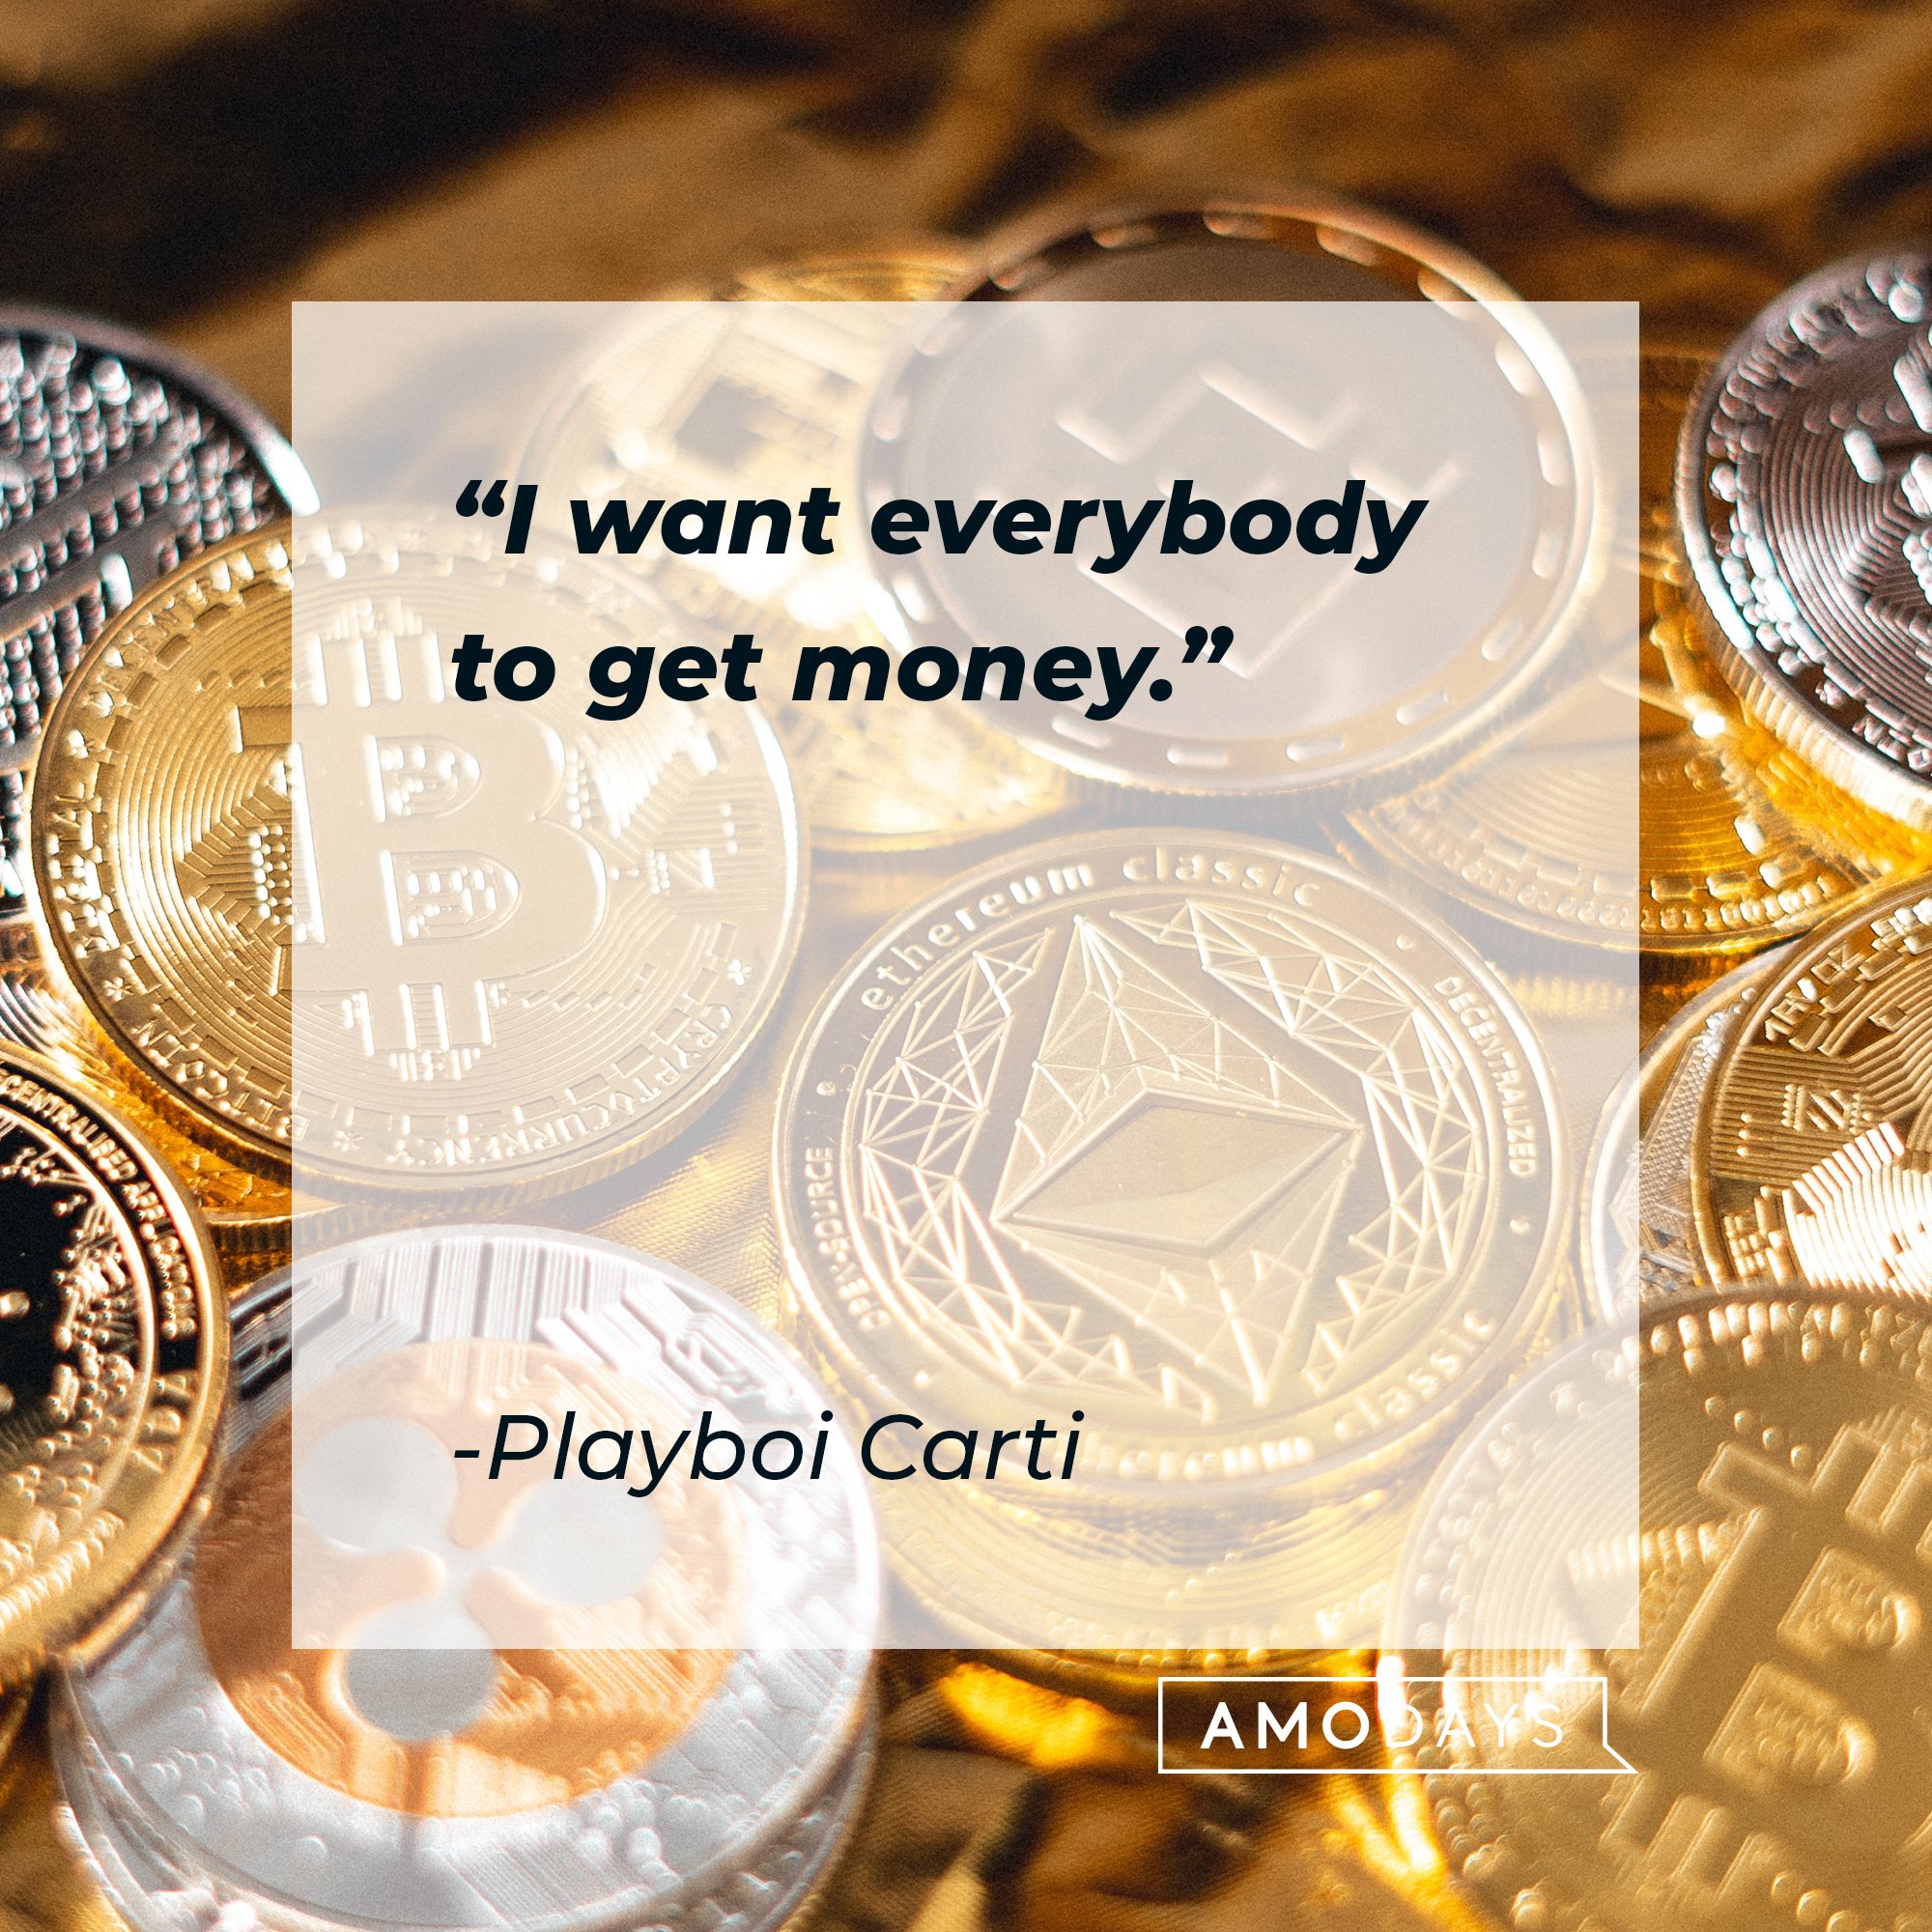 Playboi Carti ‘s quote: "I want everybody to get money." | Image: AmoDays